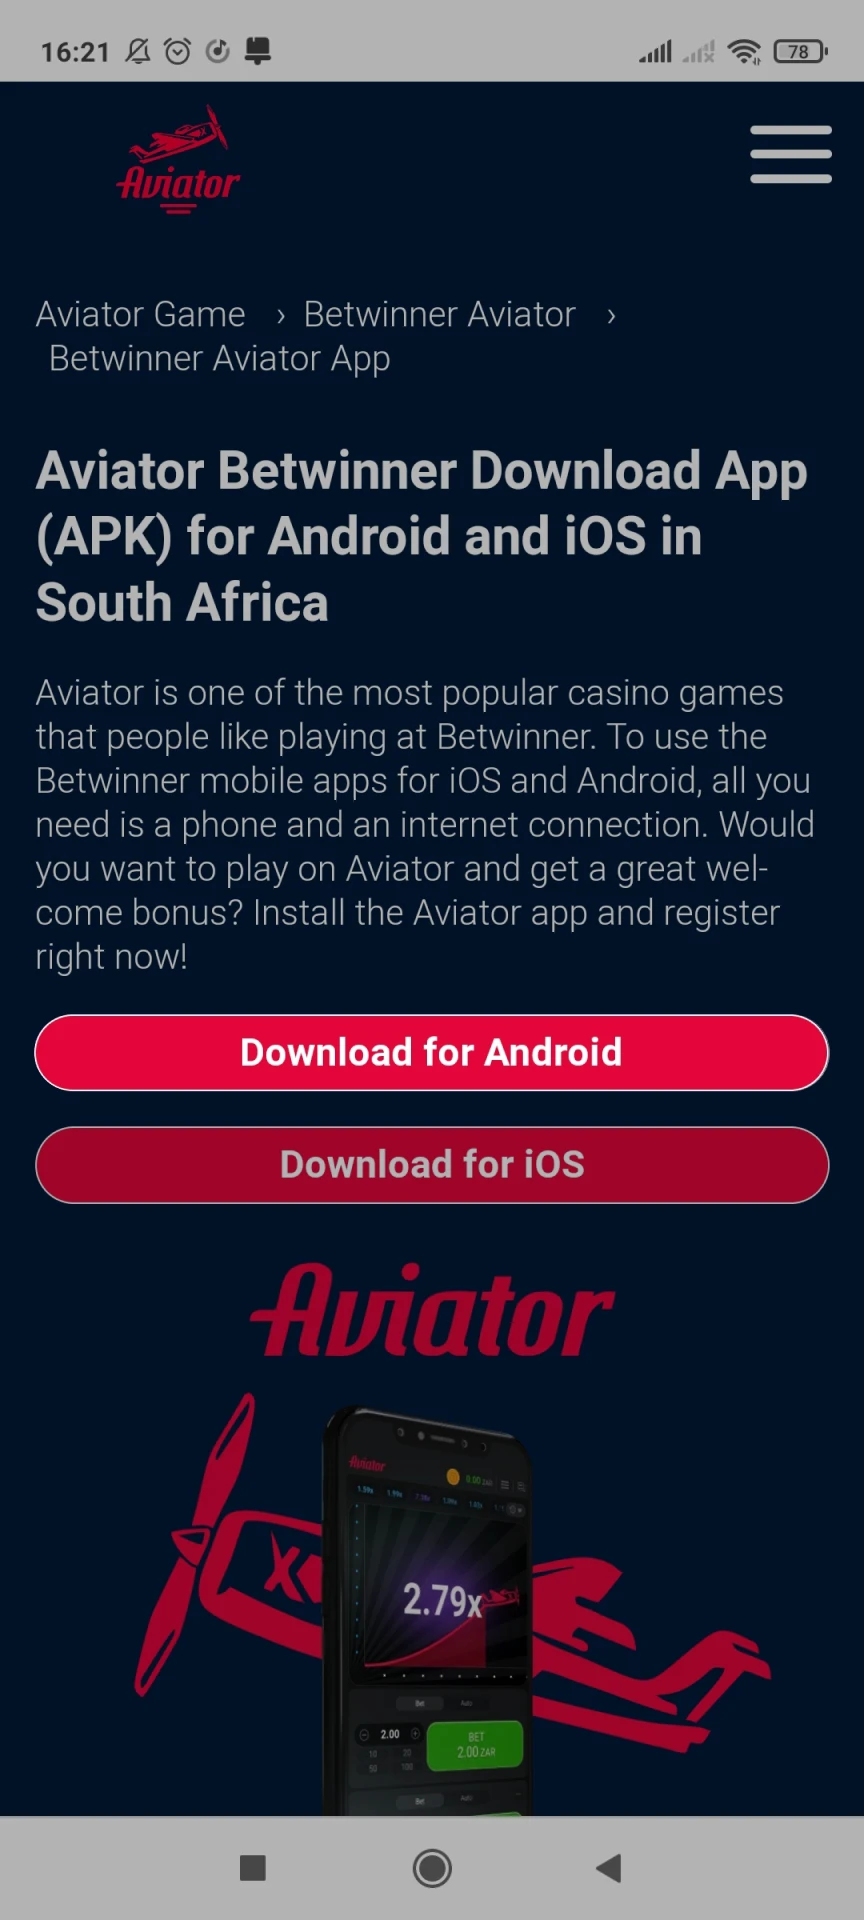 Siga o link para baixar o aplicativo Betwinner no Android.